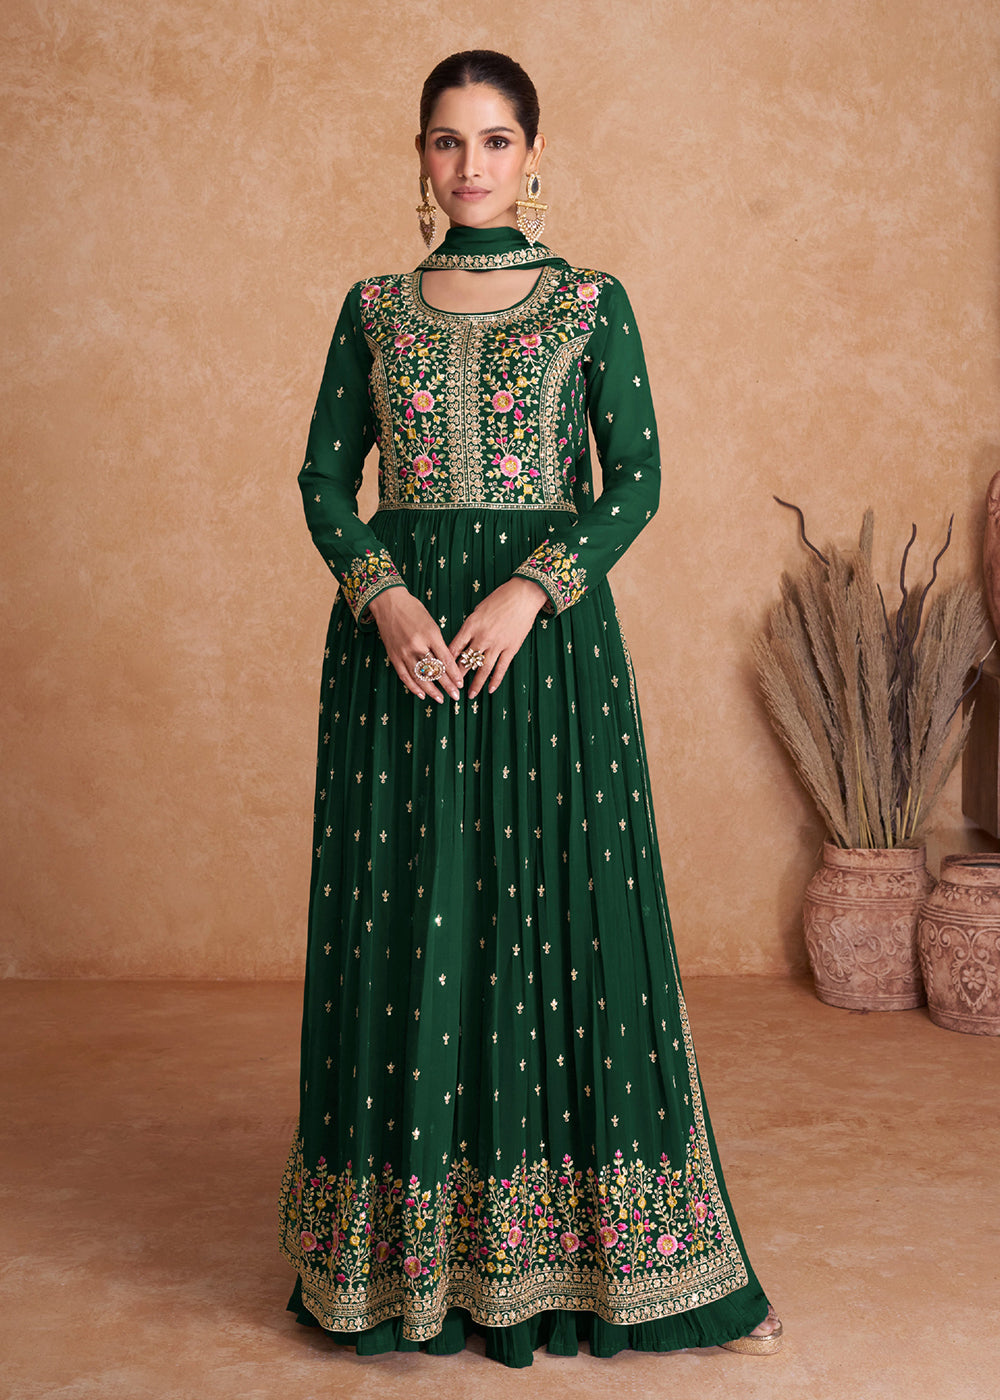 Buy Now Dark Green Wedding Long Top Georgette Palazzo Salwar Suit Online in USA, UK, Canada, Germany, Australia & Worldwide at Empress Clothing.